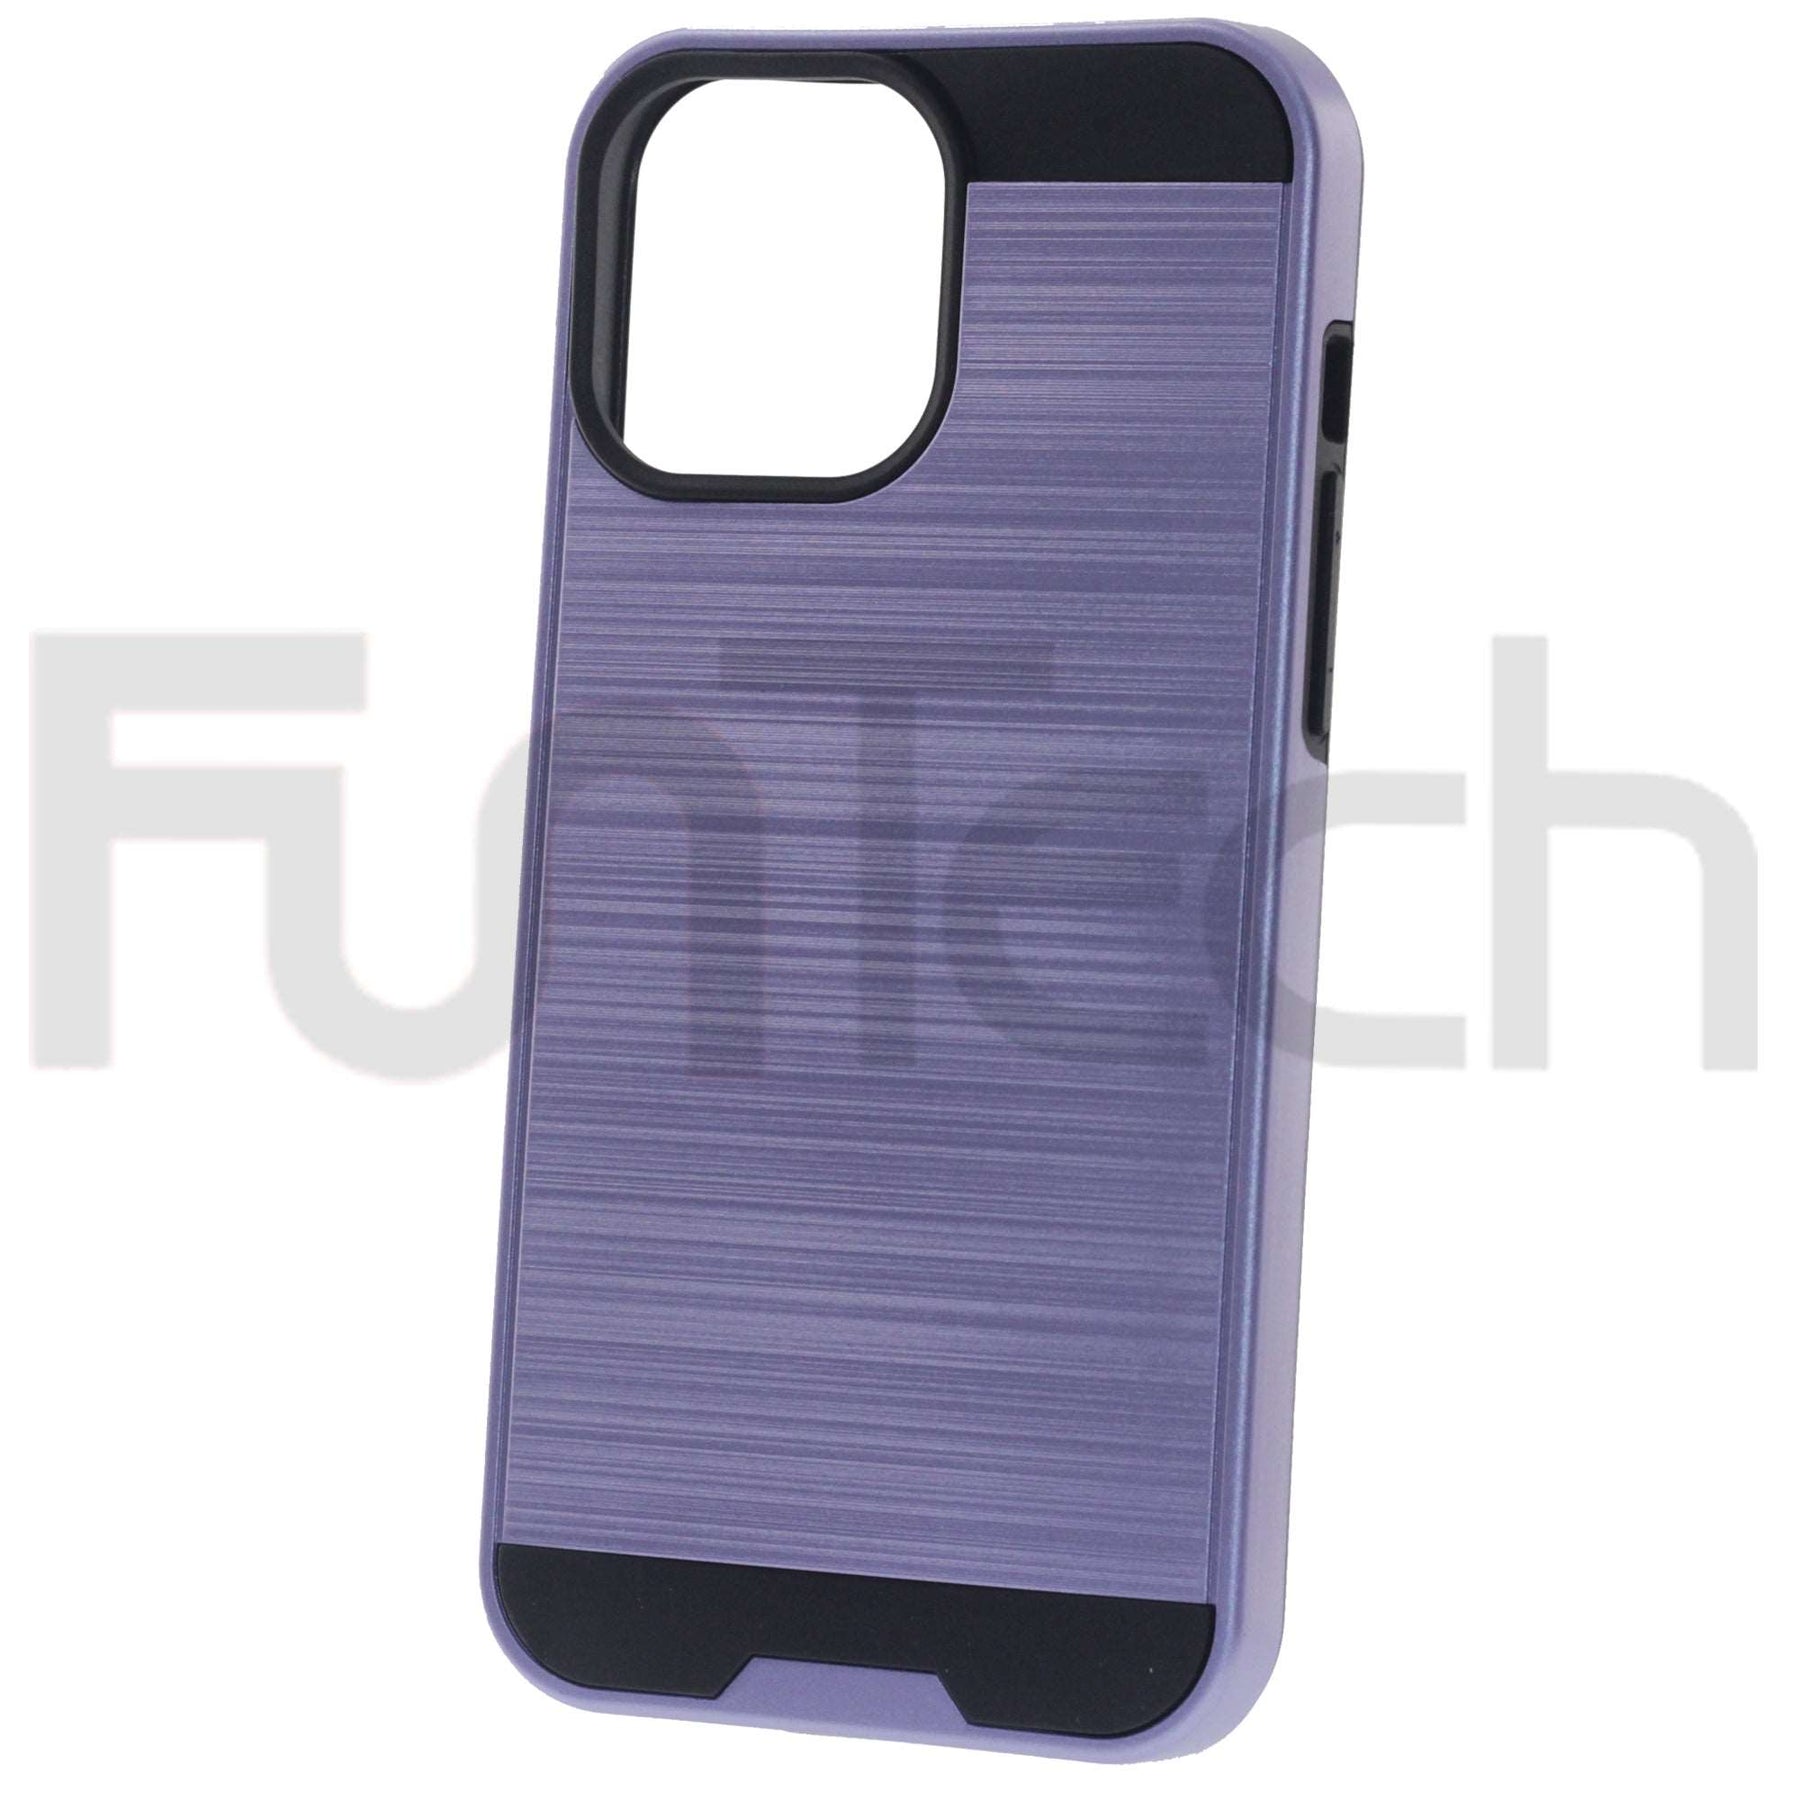 Apple iPhone 13 Pro Max, Slim Armor Case, Color Purple.